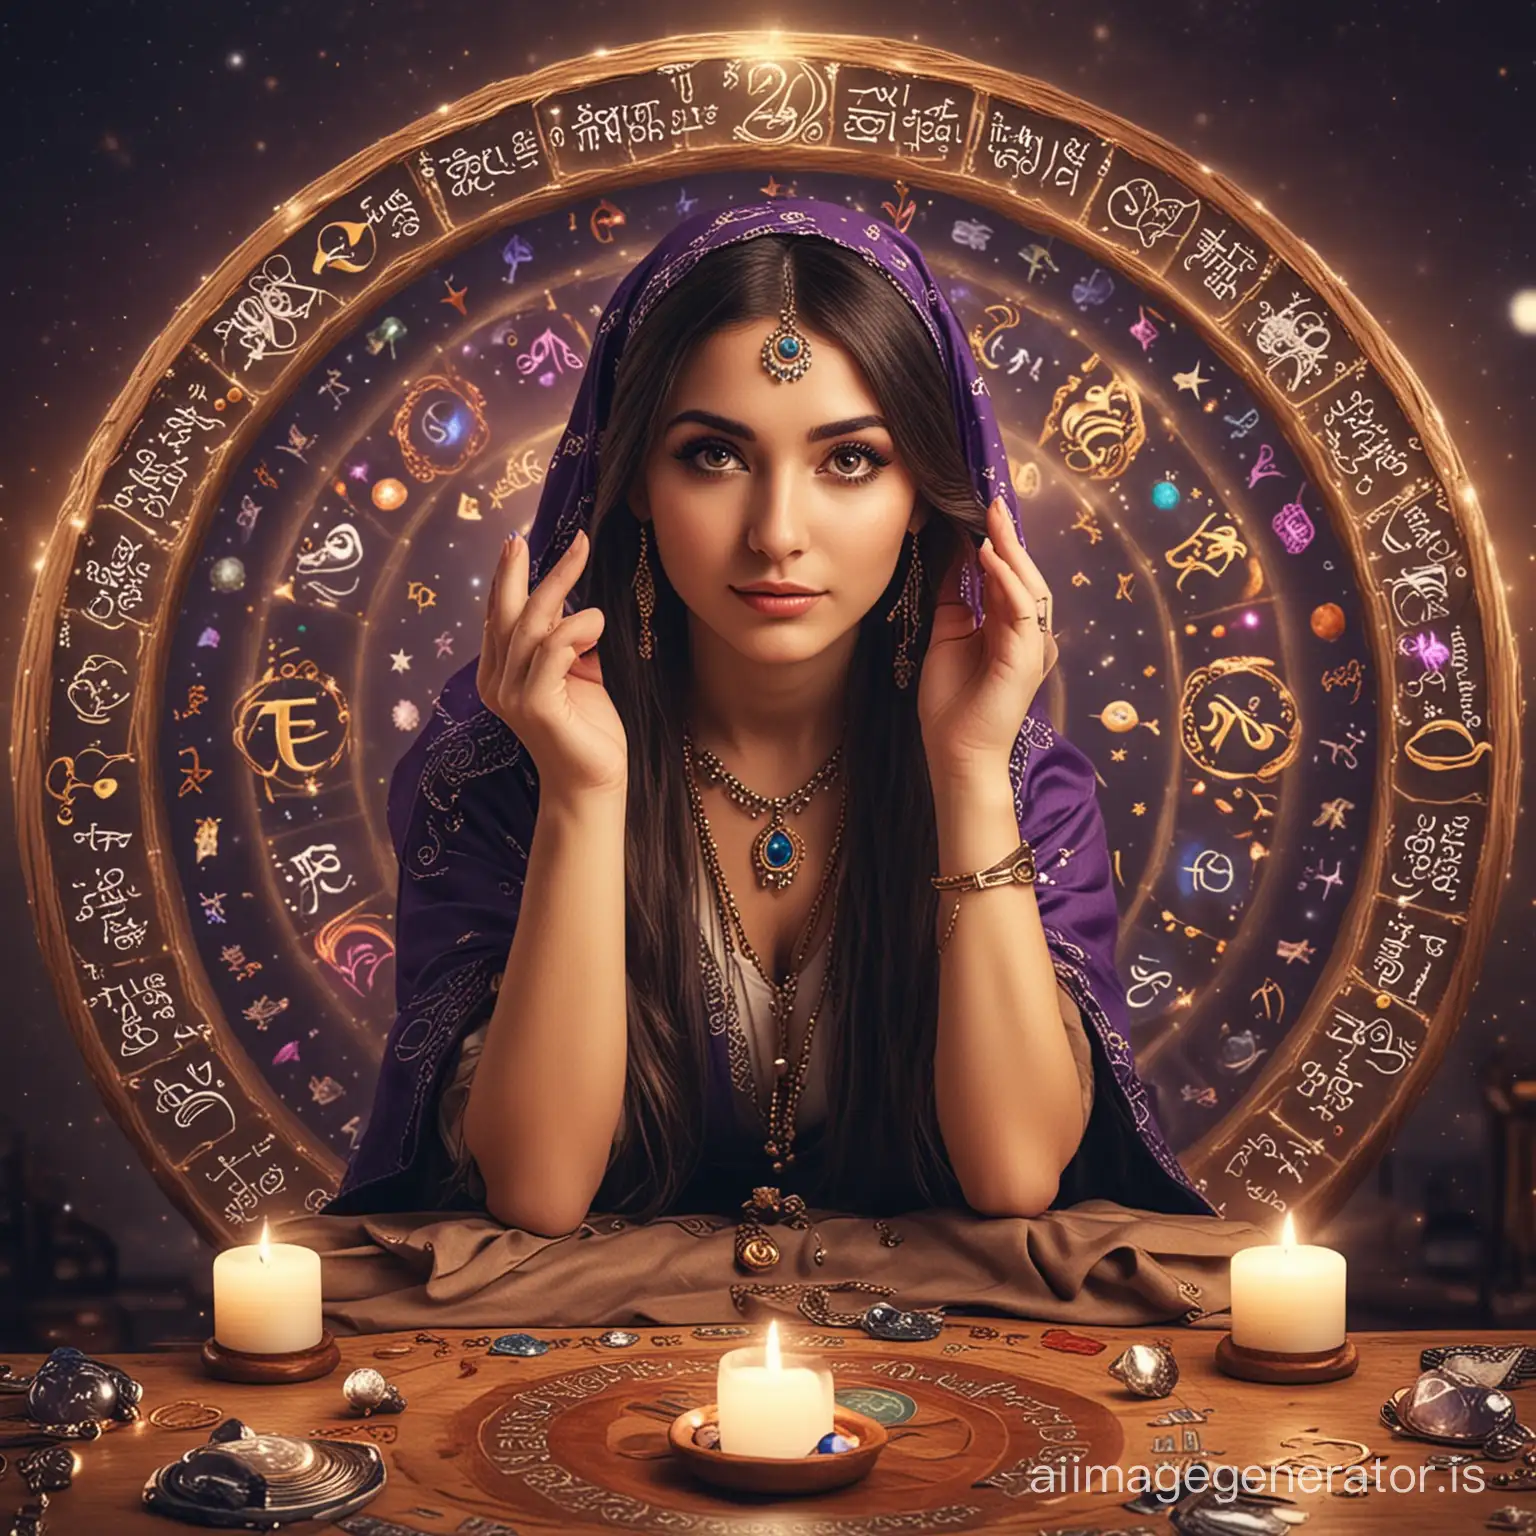 Exquisite-Turkish-Female-Fortune-Teller-Predicting-Zodiac-Signs